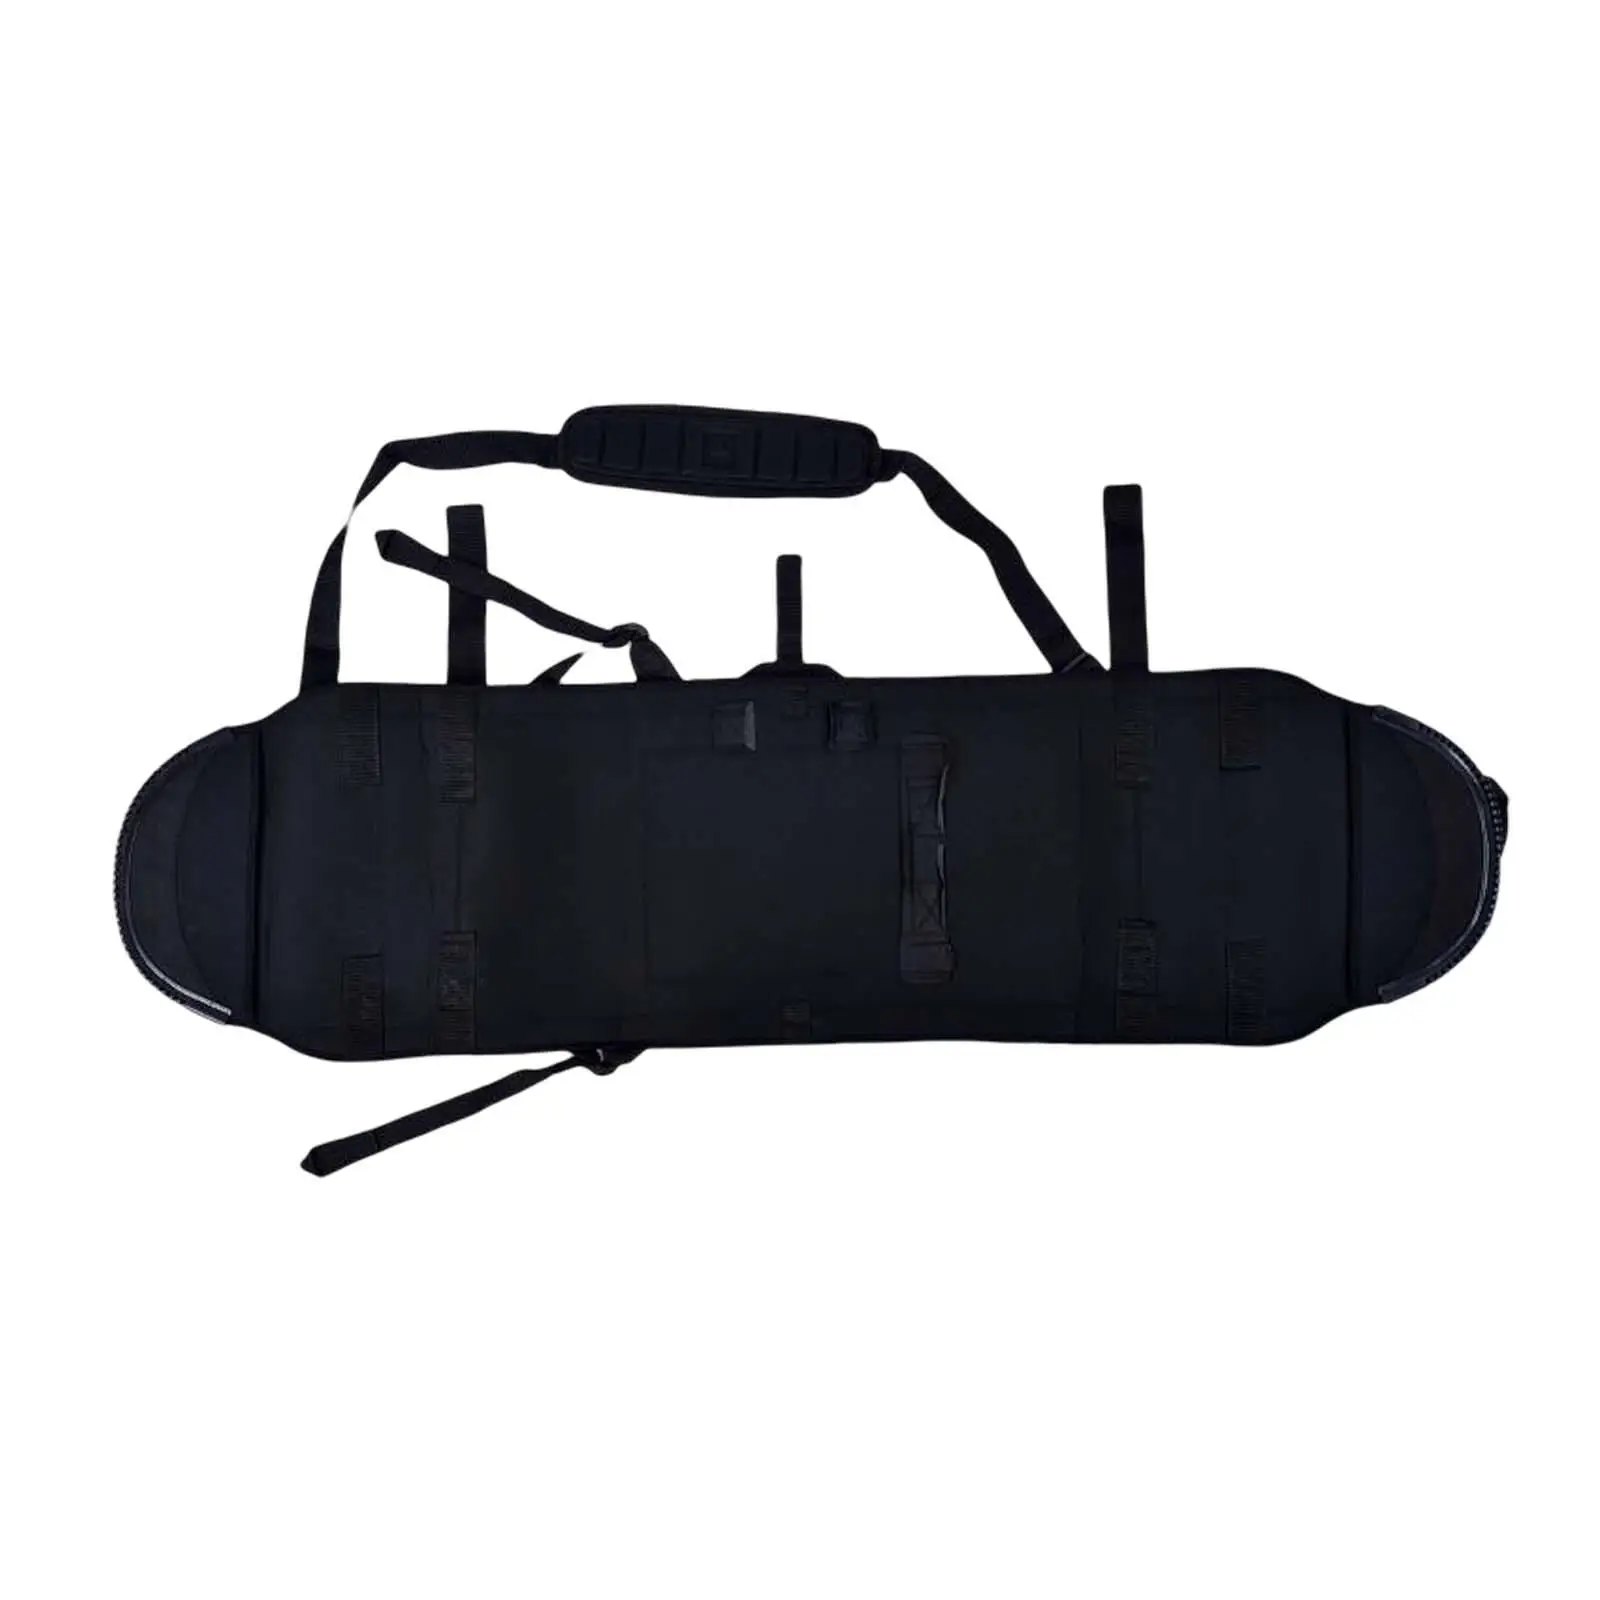 Snowboard Sleeve Cover Case Snow Board Accessories Adjustable Shoulder Strap Protection Ski Storage Bag for Women Men Longboard